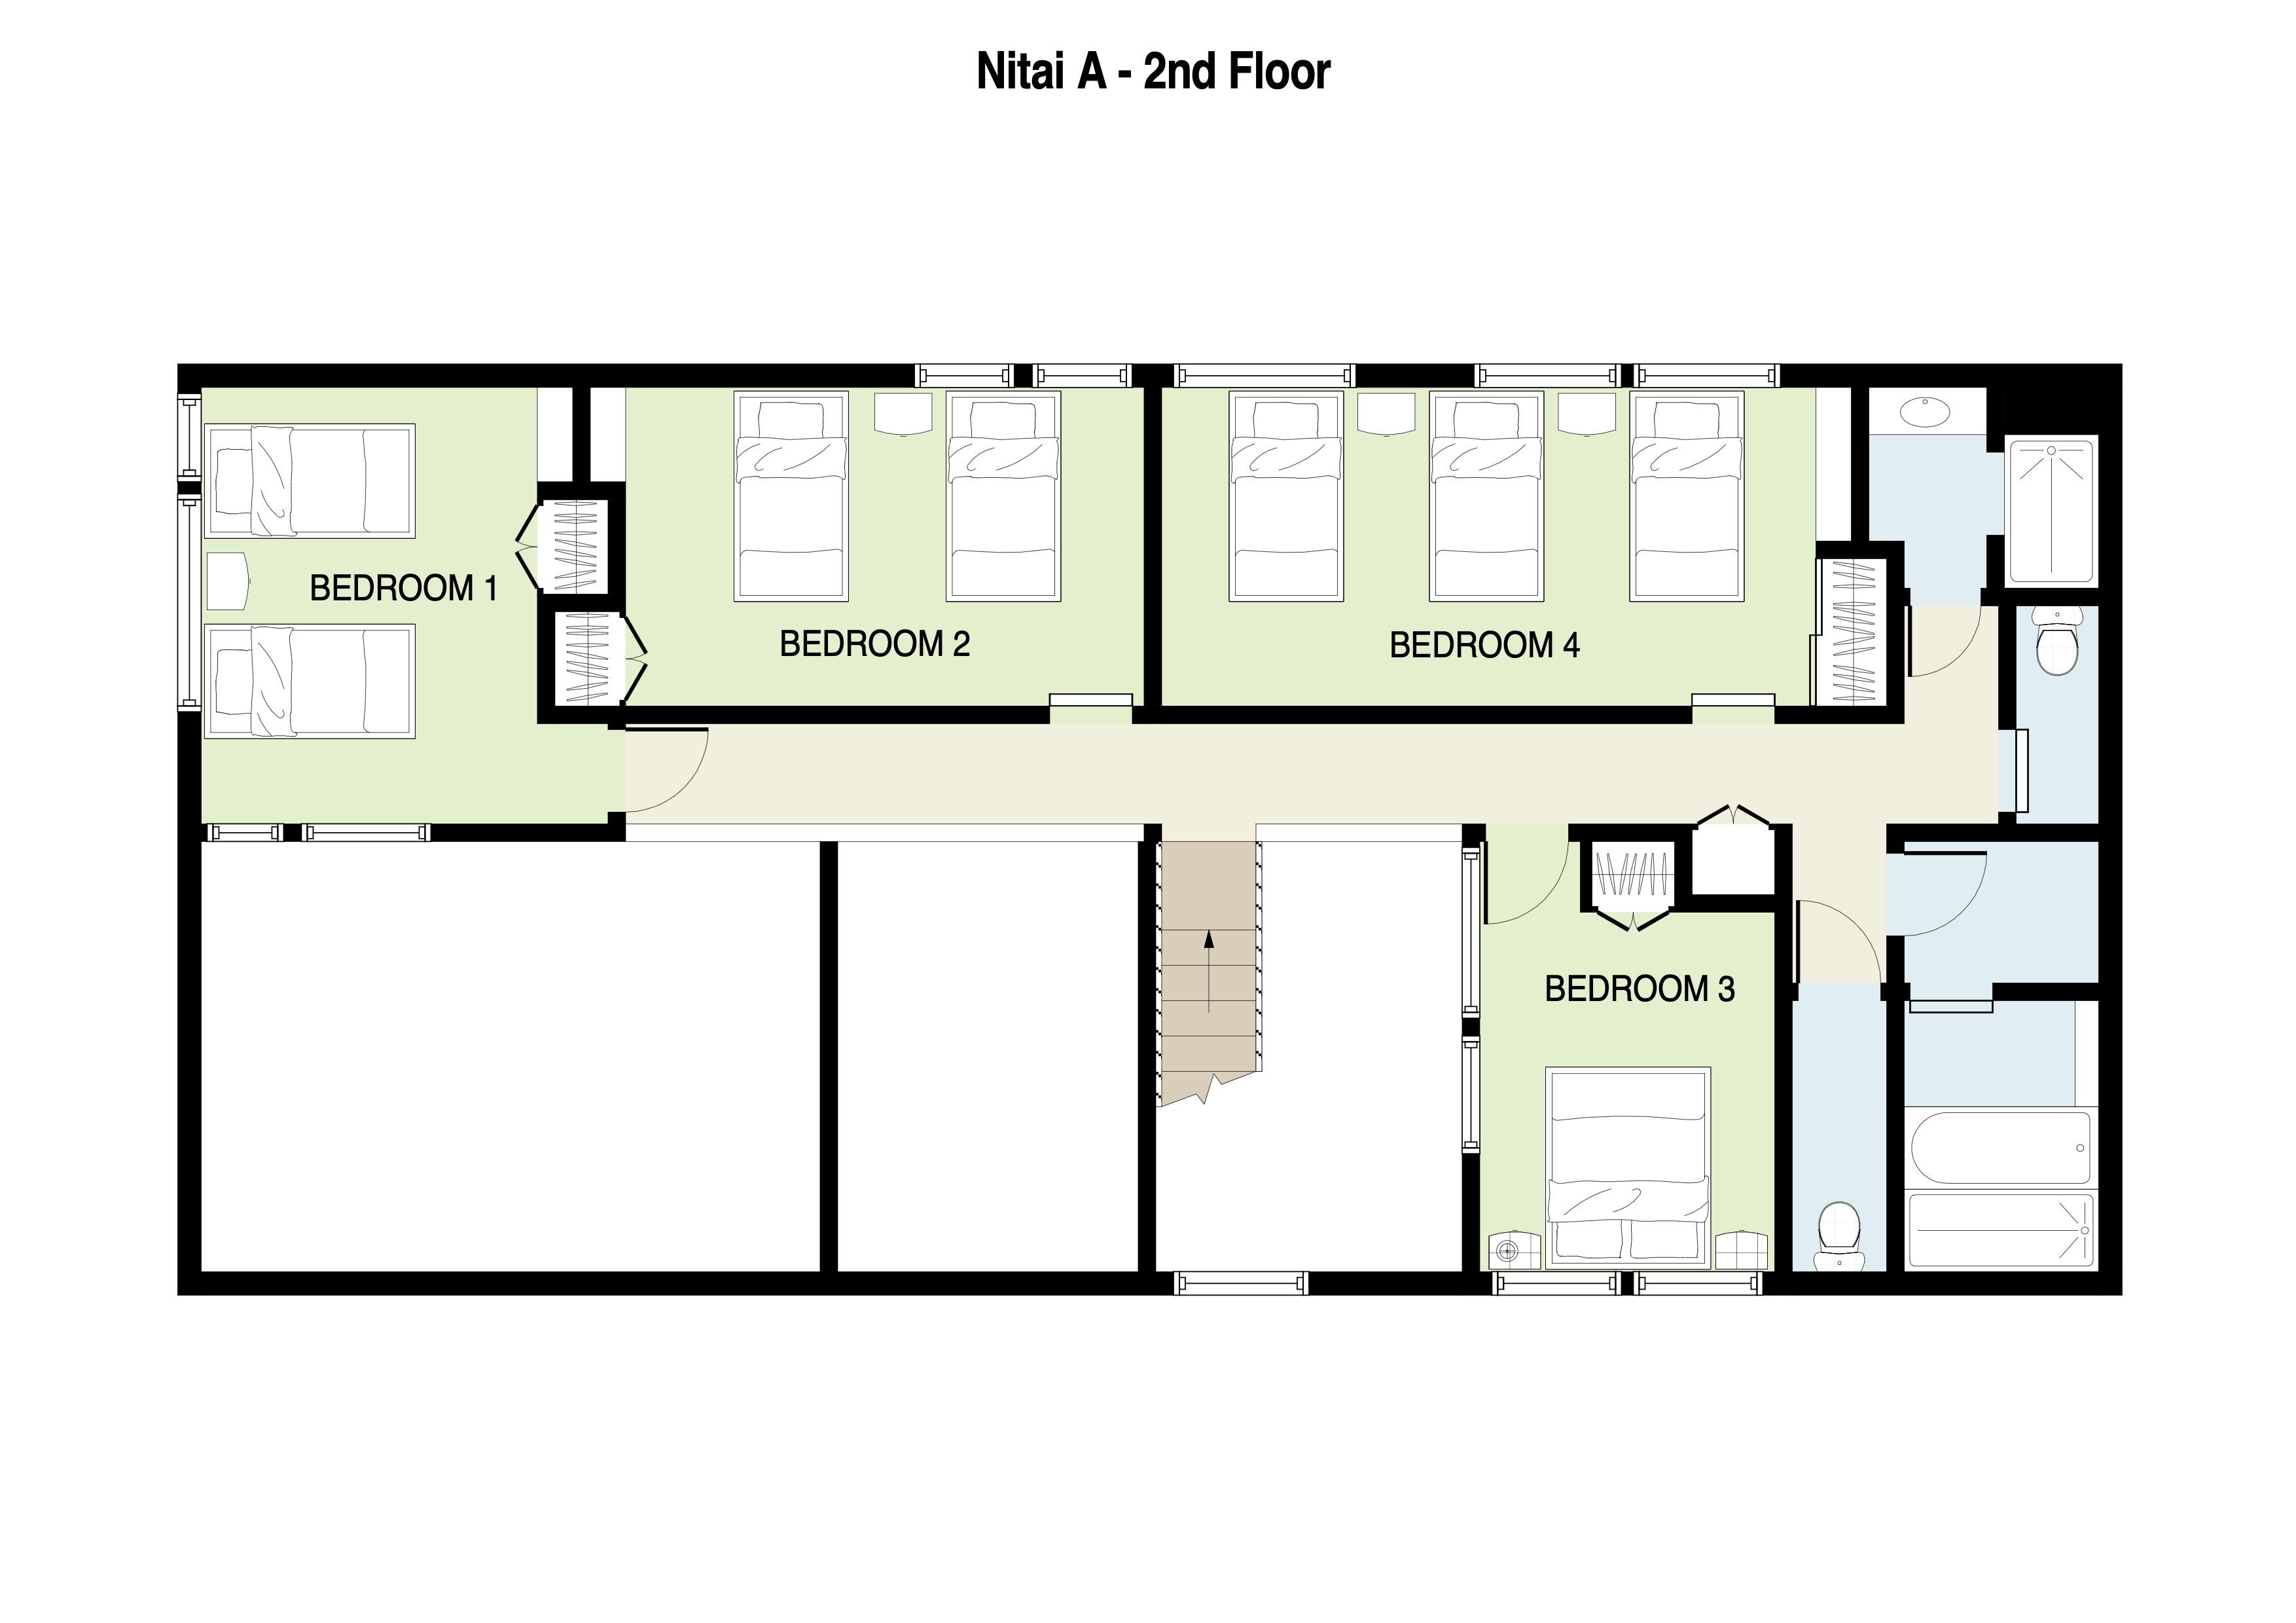 Nitai A 2nd floor plans